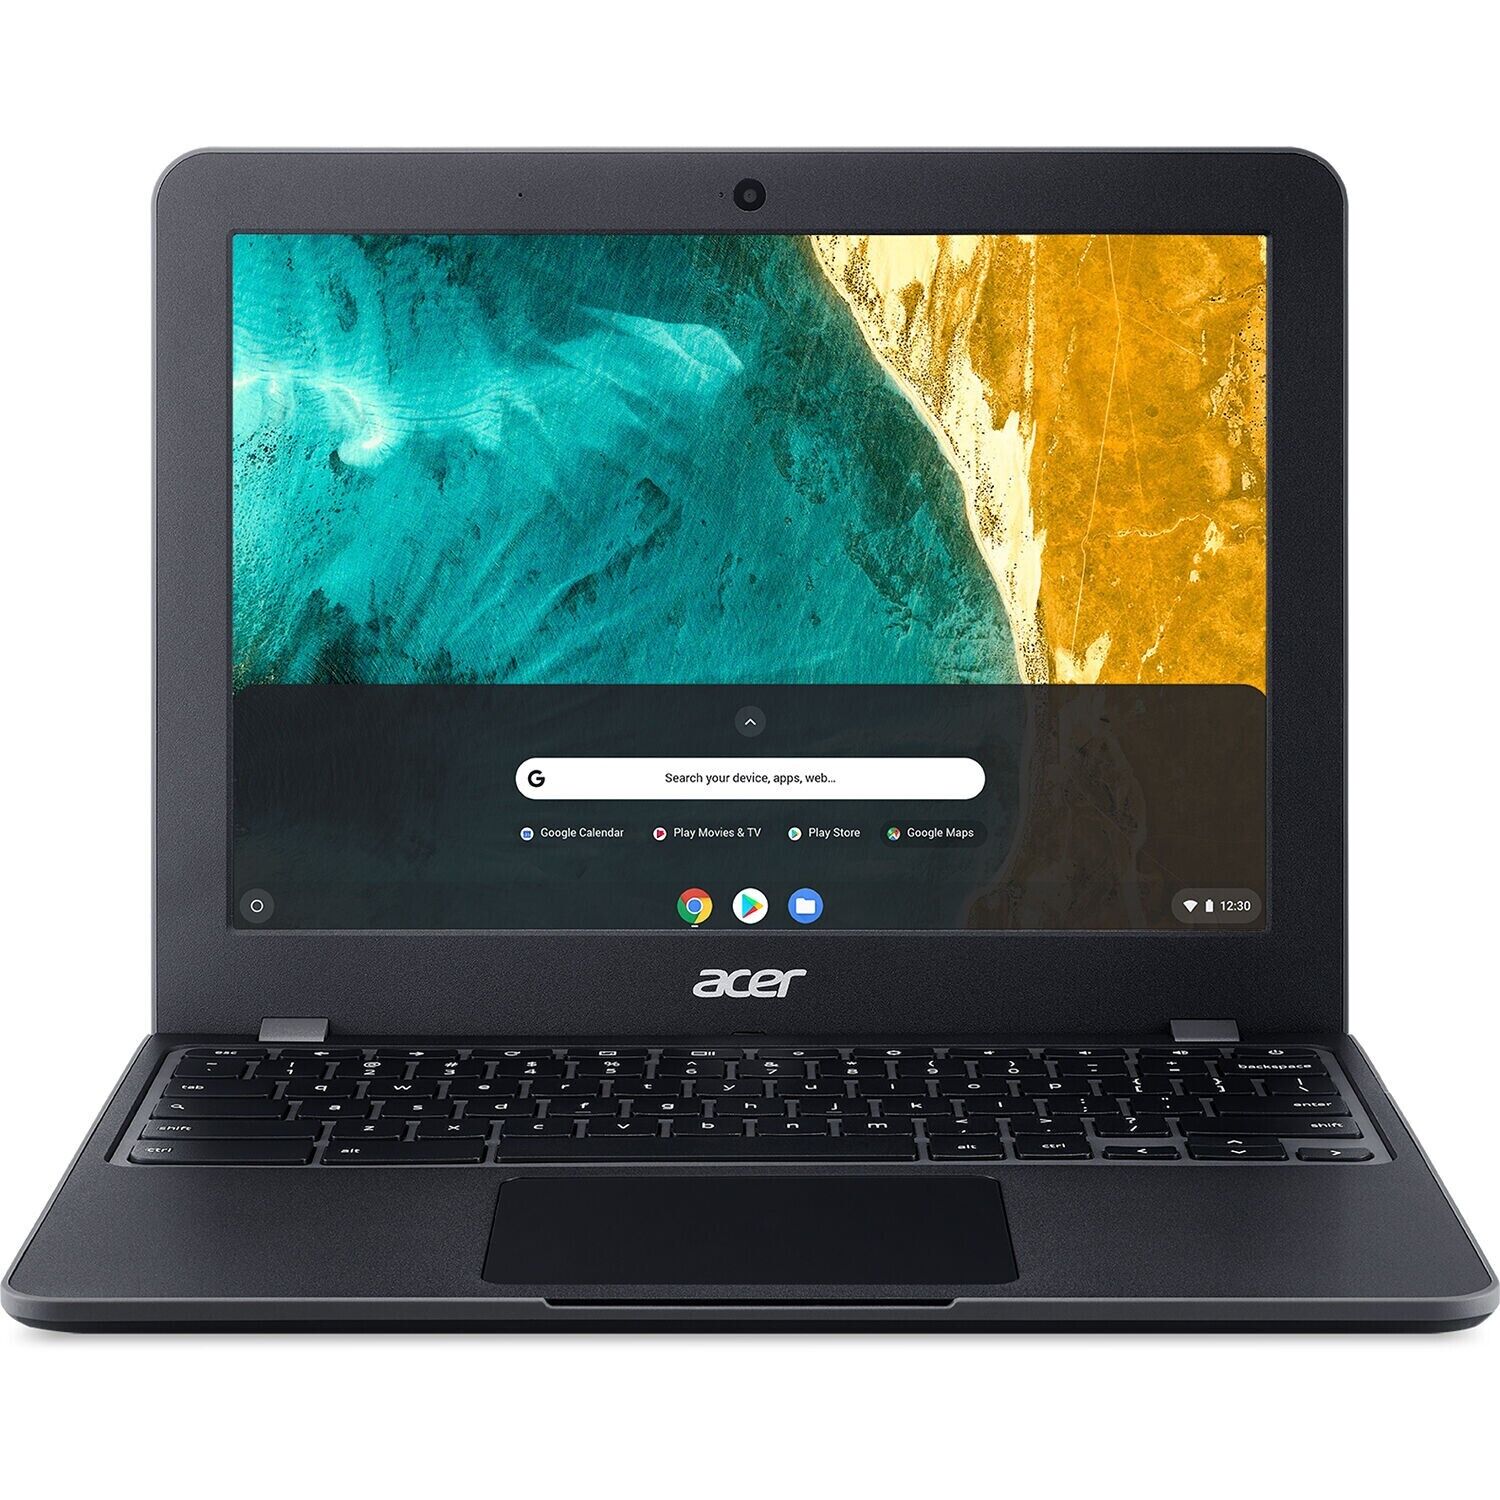 Acer (Chromebook) C851 (NX.H96AA.001) 4GB 32GB Black (WiFi) Very Good Condition